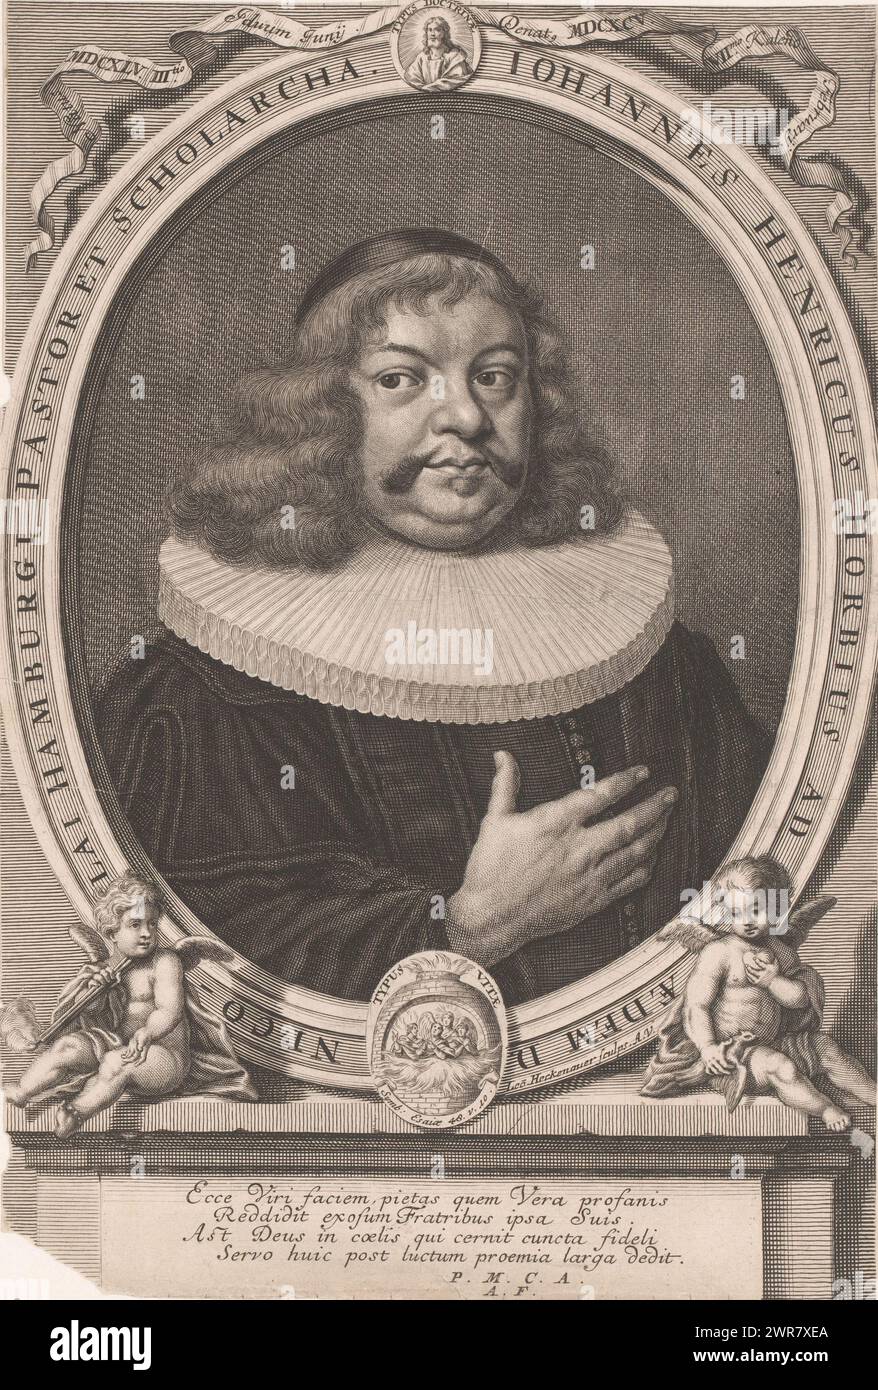 Portrait of Johann Heinrich Horb, print maker: Leonhard Heckenauer, Monogrammist PMCA, Augsburg, 1695 - 1704, paper, engraving, height 305 mm × width 206 mm, print Stock Photo